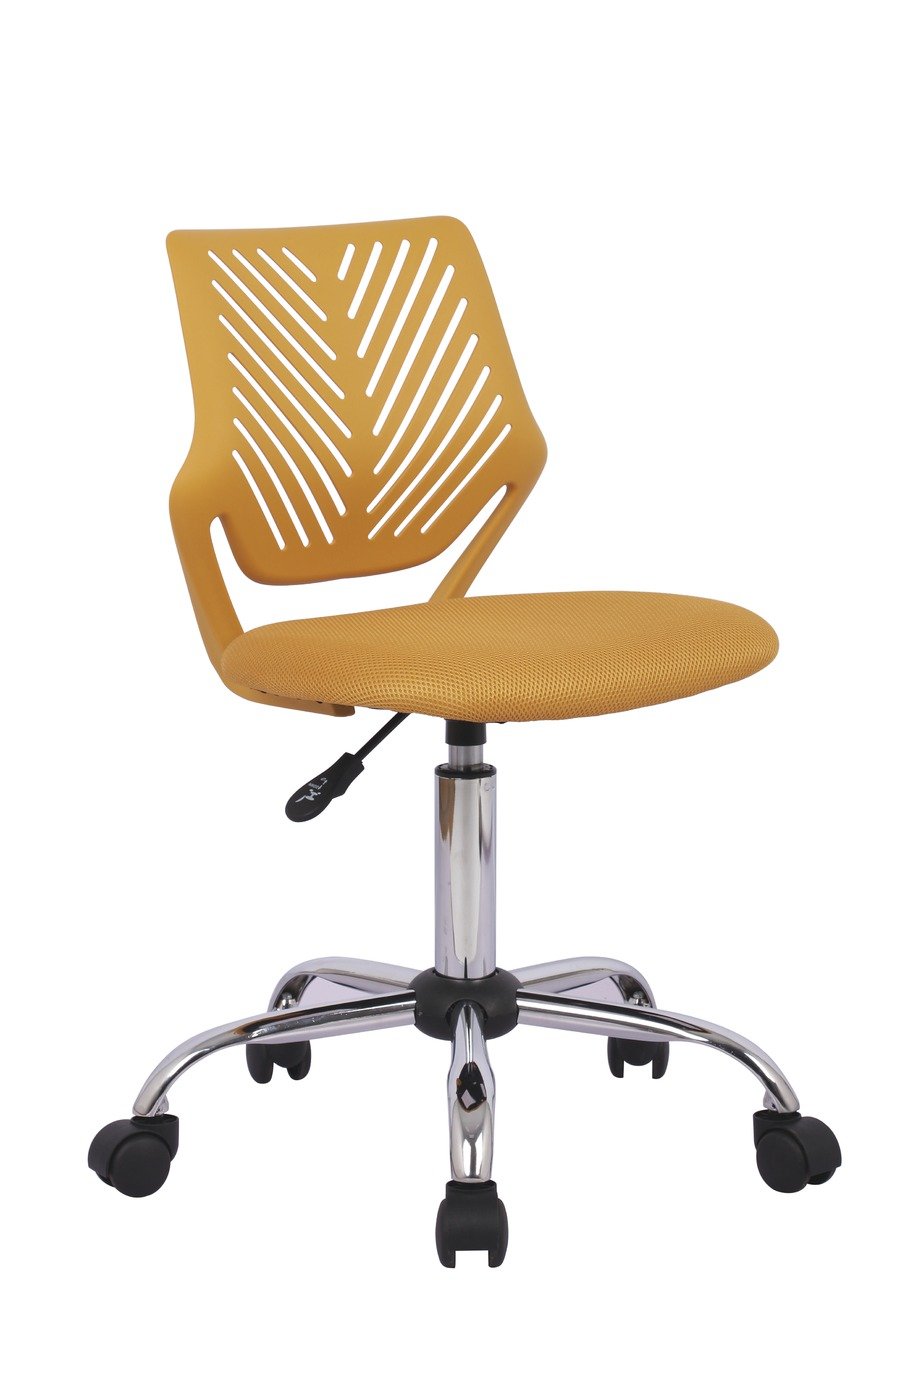 Argos Home Plastic Office Chair - Mustard Yellow